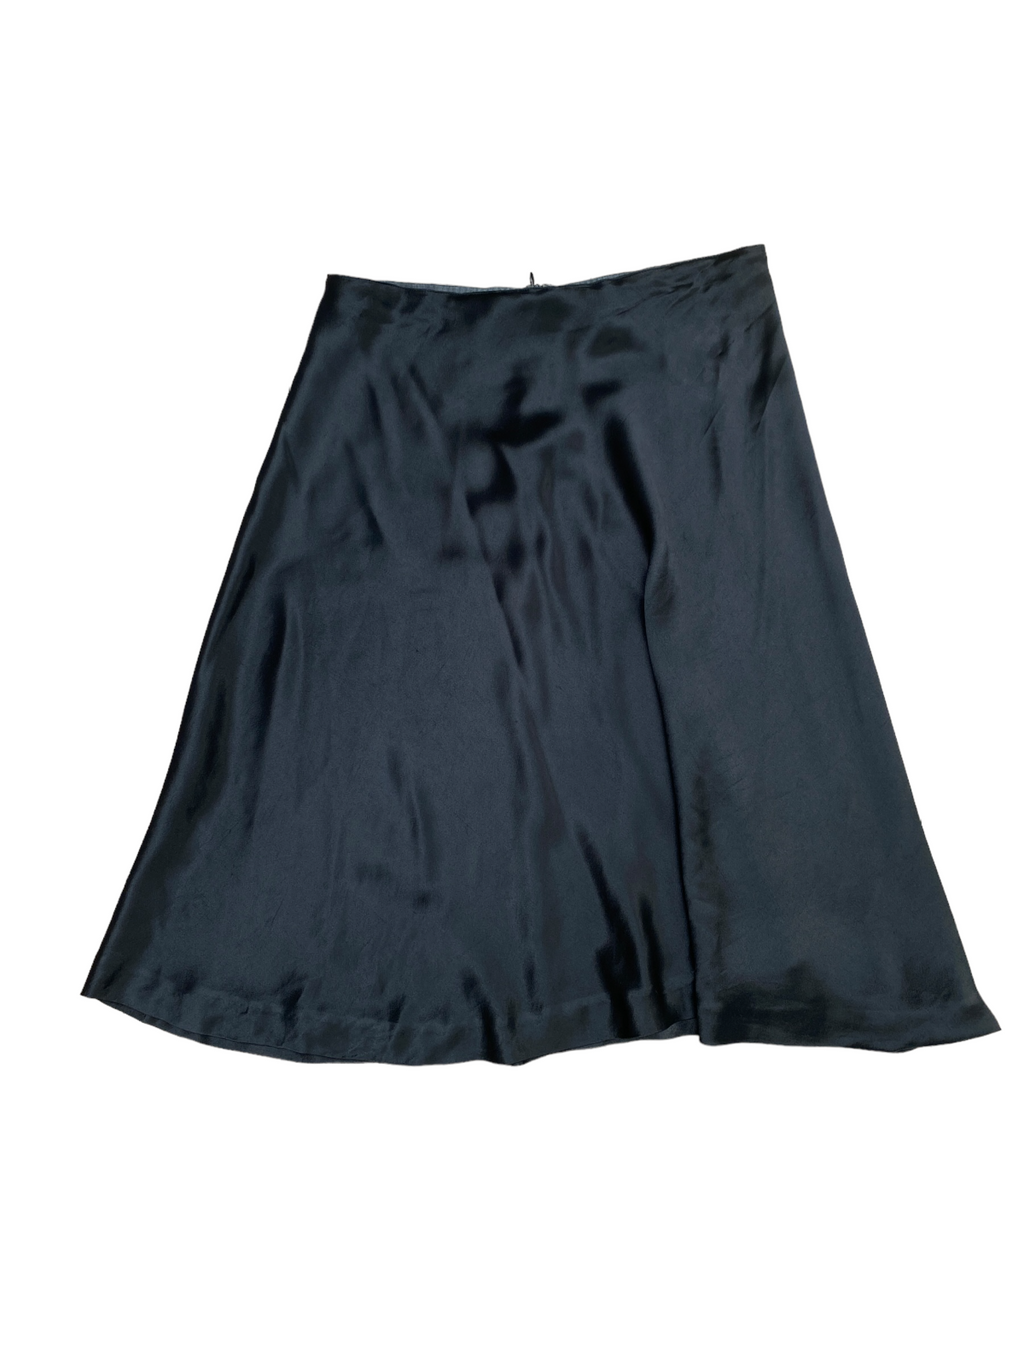 Early 1990’s Vintage Skirt Black Viscose / Reverse Lining midi